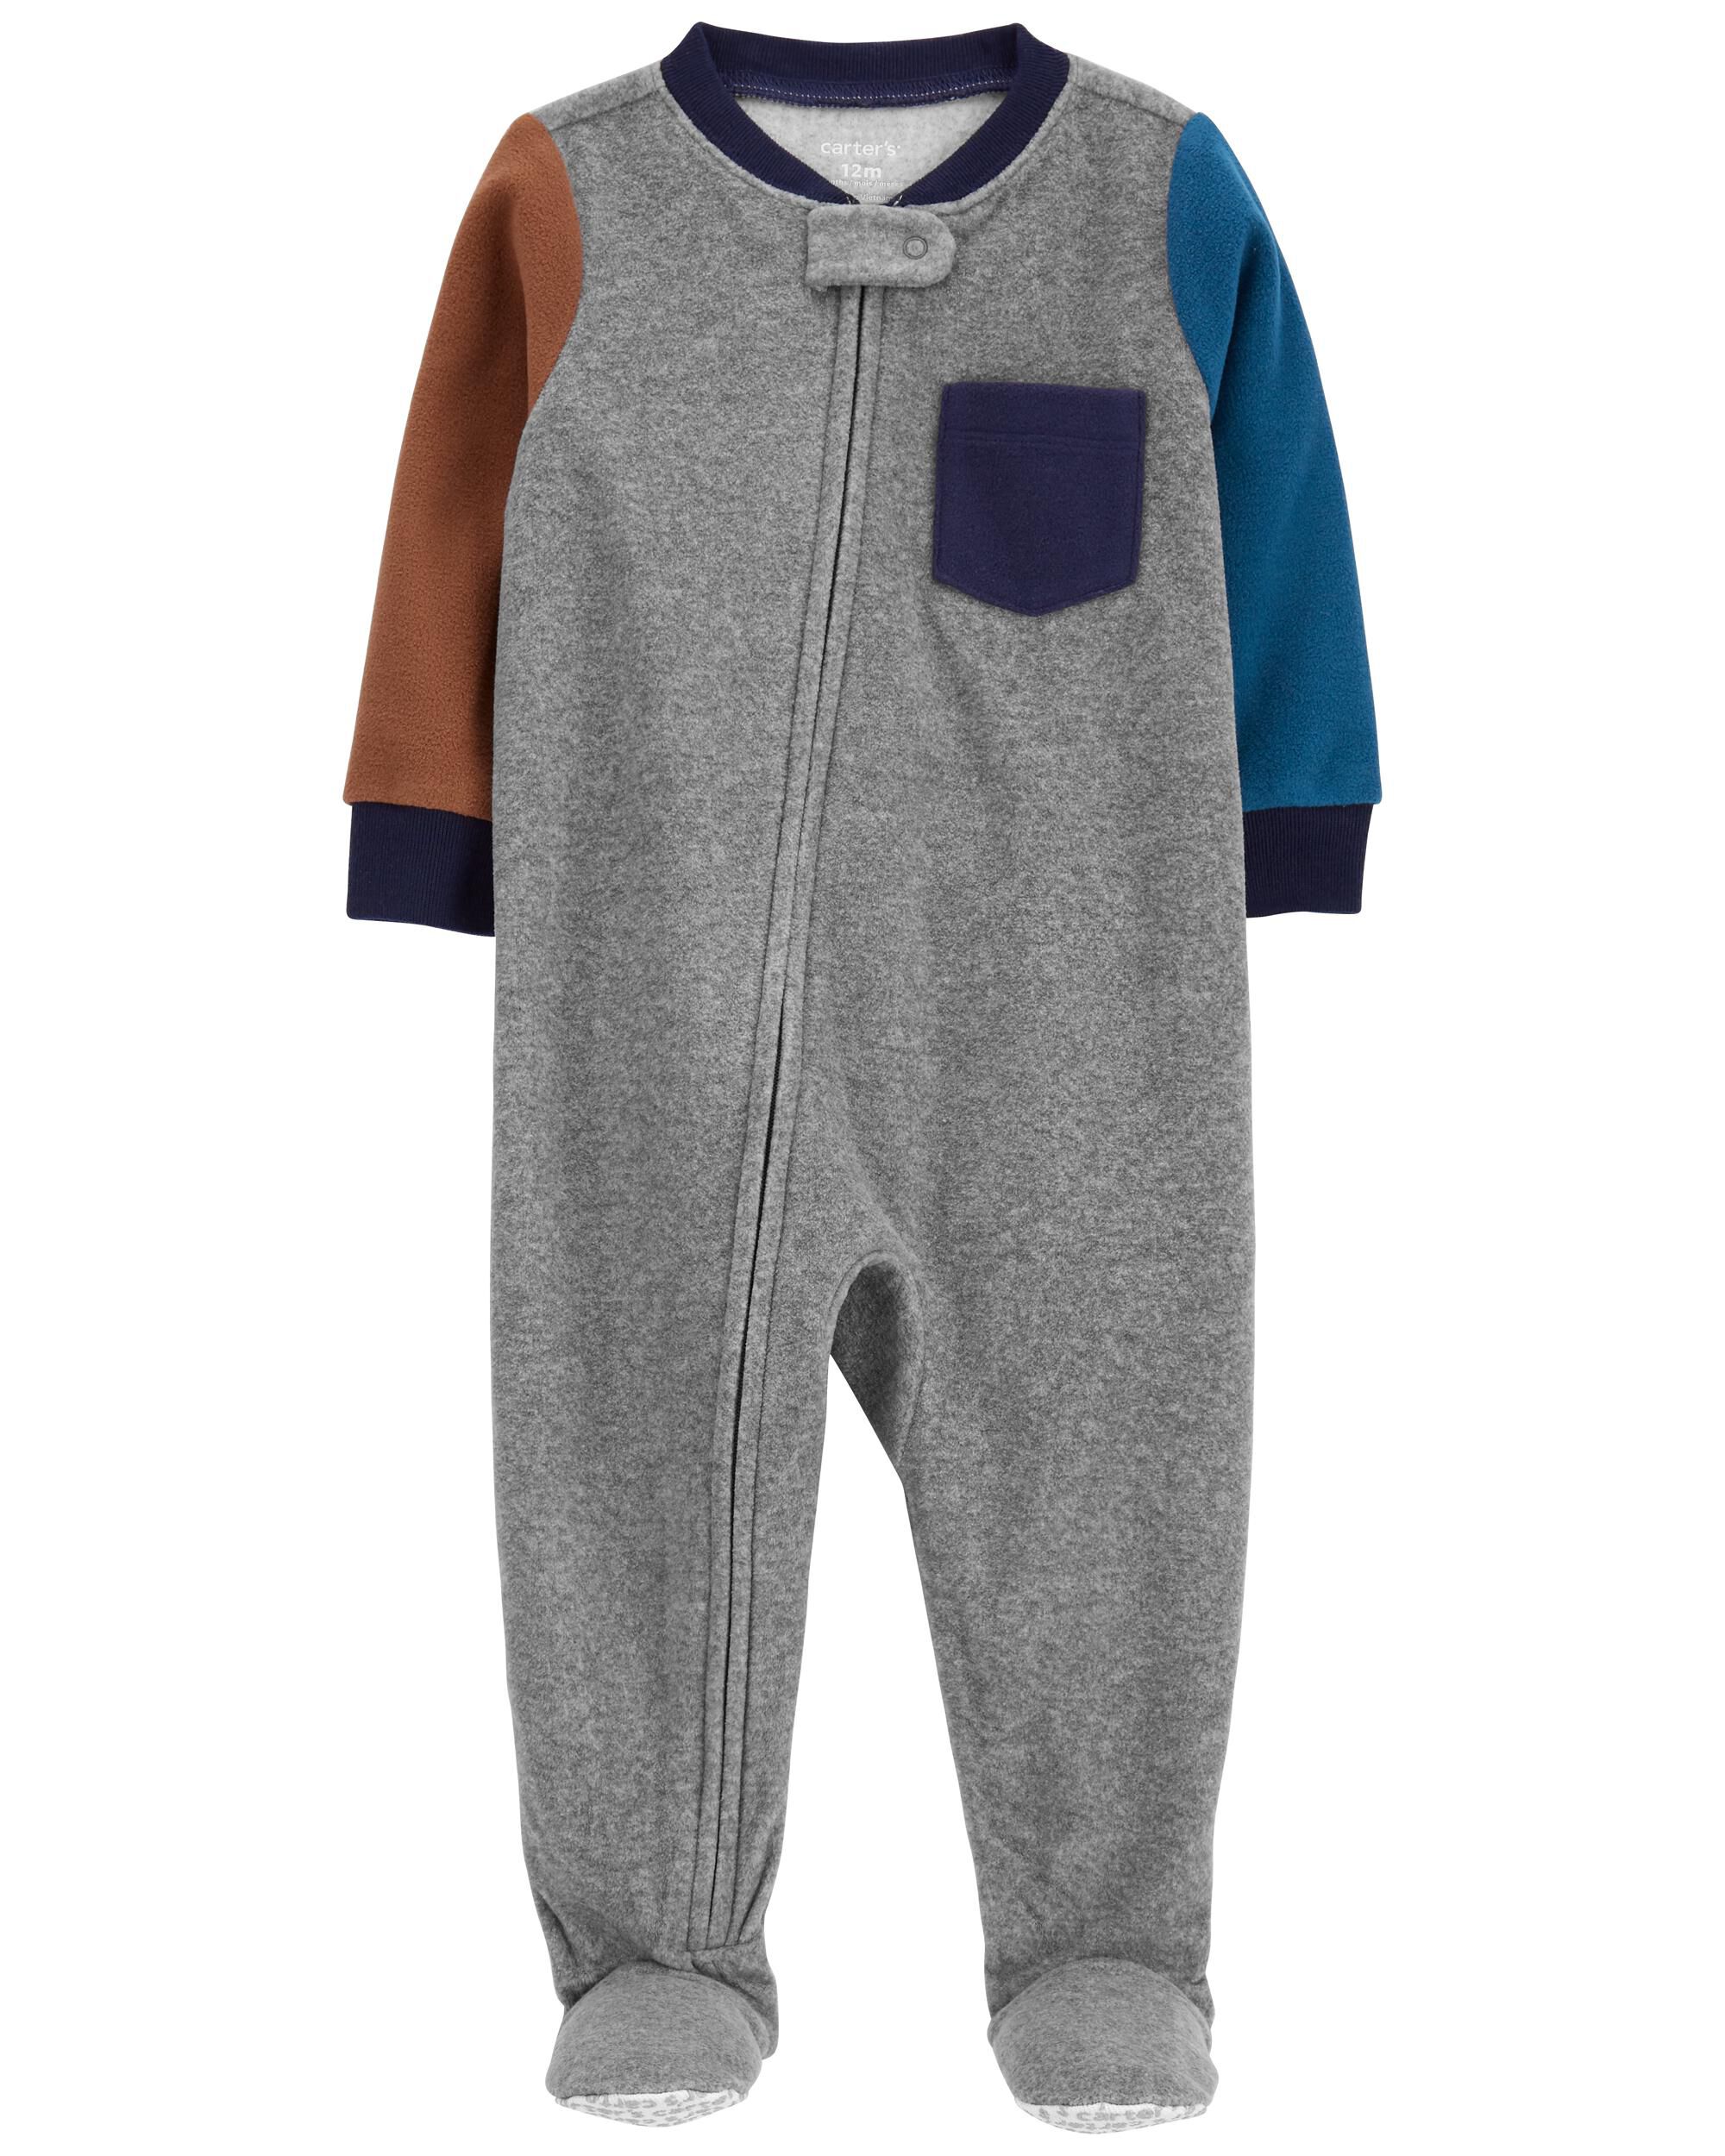 New Carter's Boys Cheetah Poly Pajama 2 pc Set Toddler many sizes 